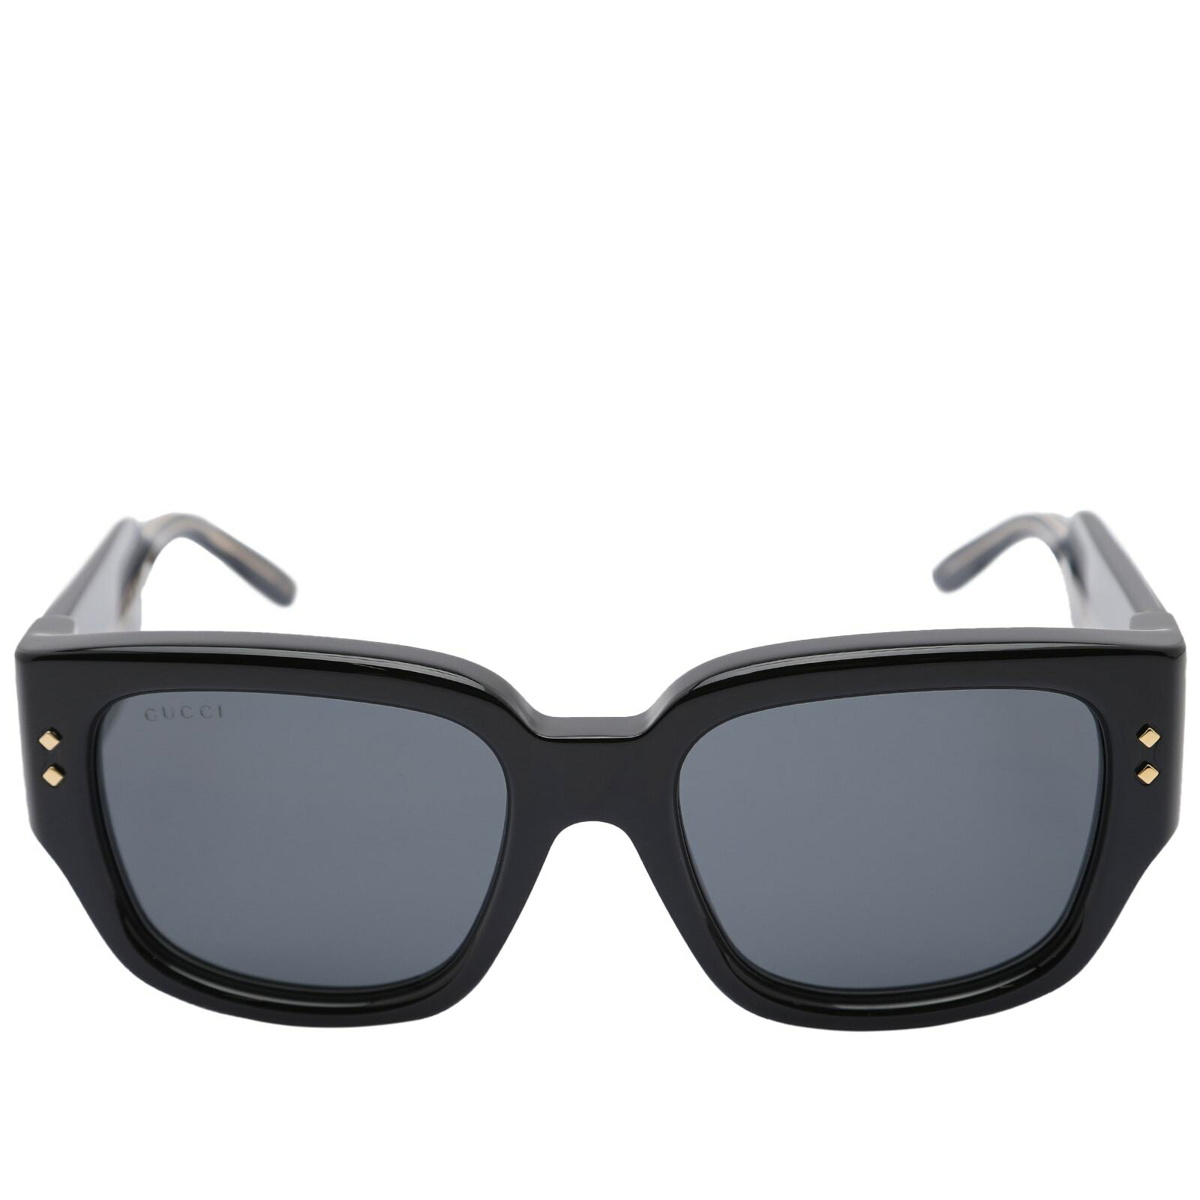 Gucci Men's Eyewear GG1261S Sunglasses in Black/Grey Gucci